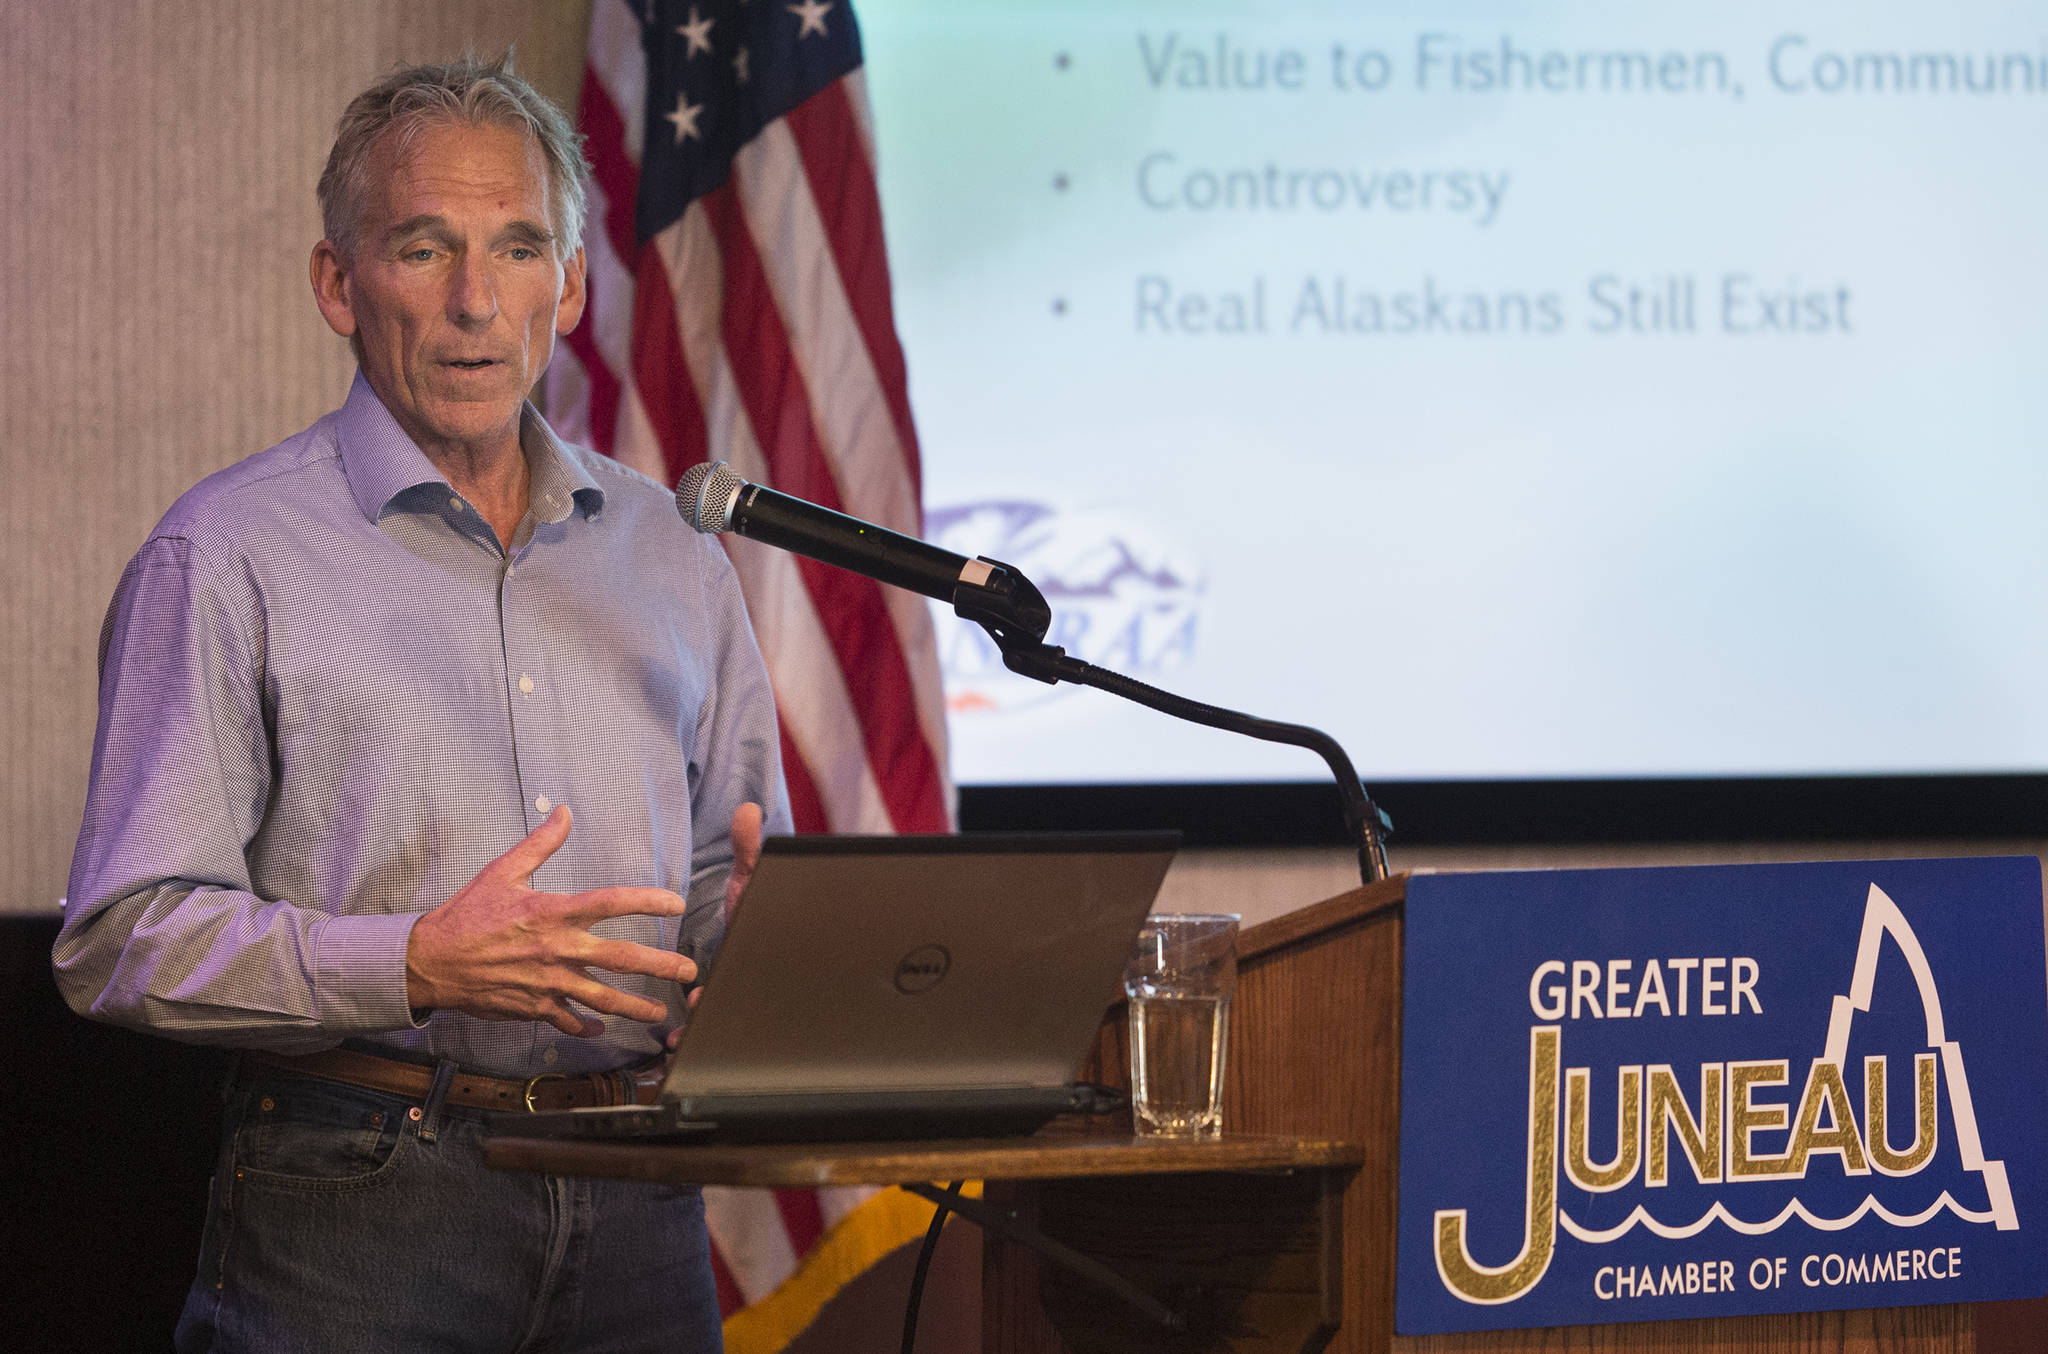 Steve Reifenstuhl, general manager of Northern Southeast Regional Aquaculture Association speaks to the Juneau Chamber of Commerce at the Hangar Ballroom on Thursday, March 15, 2018. (Michael Penn | Juneau Empire)